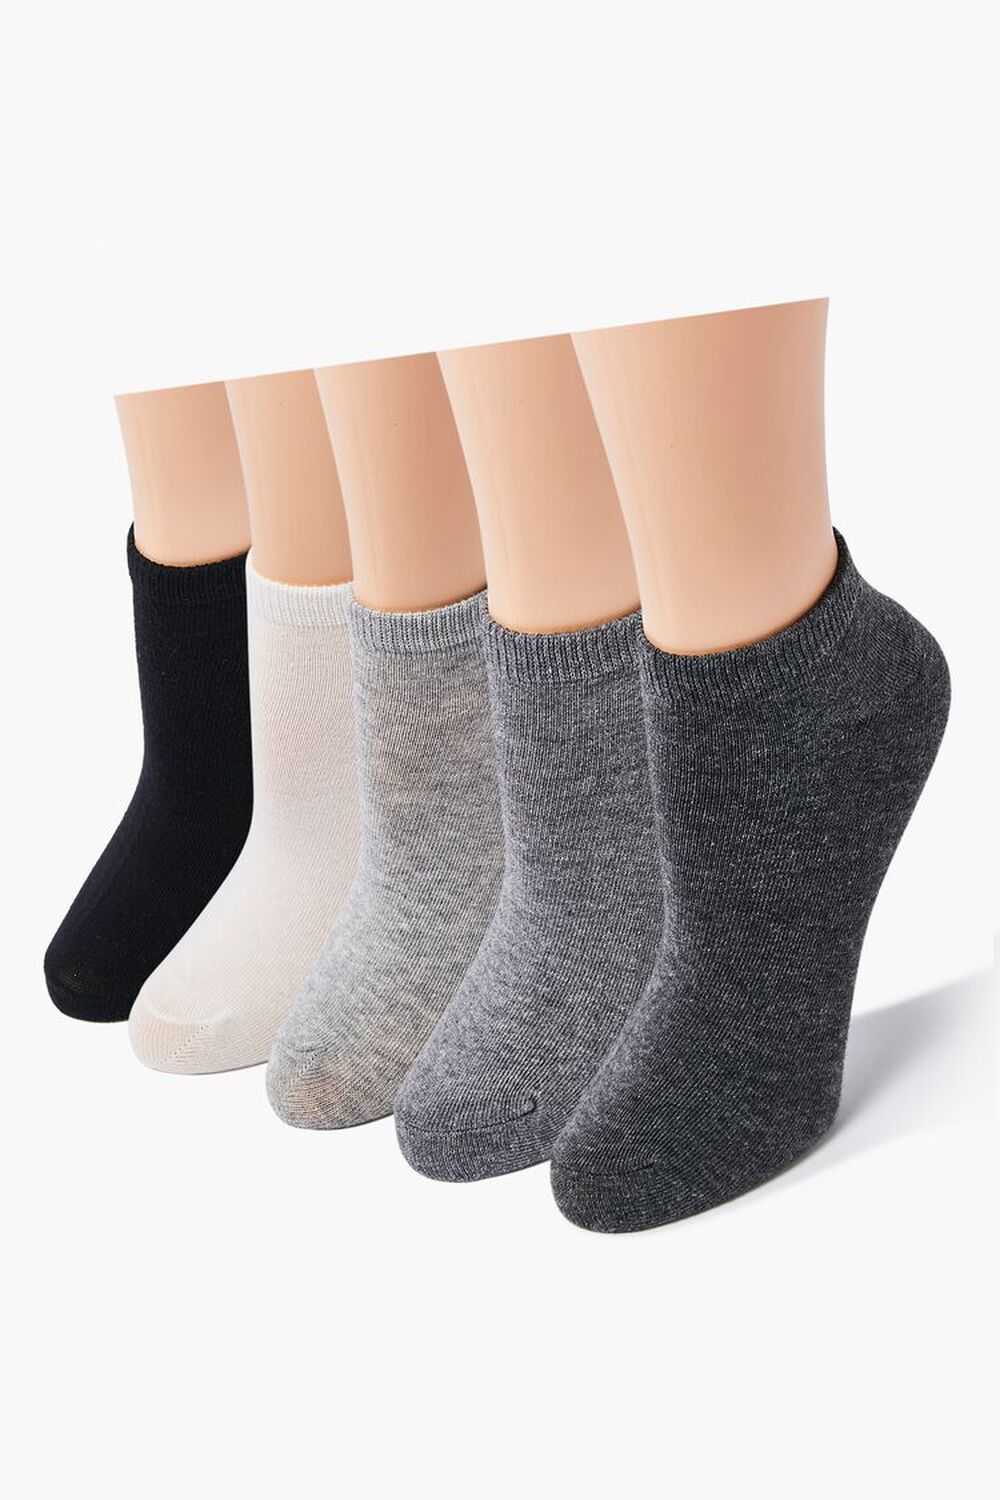 BLACK/GREY Ankle Socks - 5 Pack, image 1